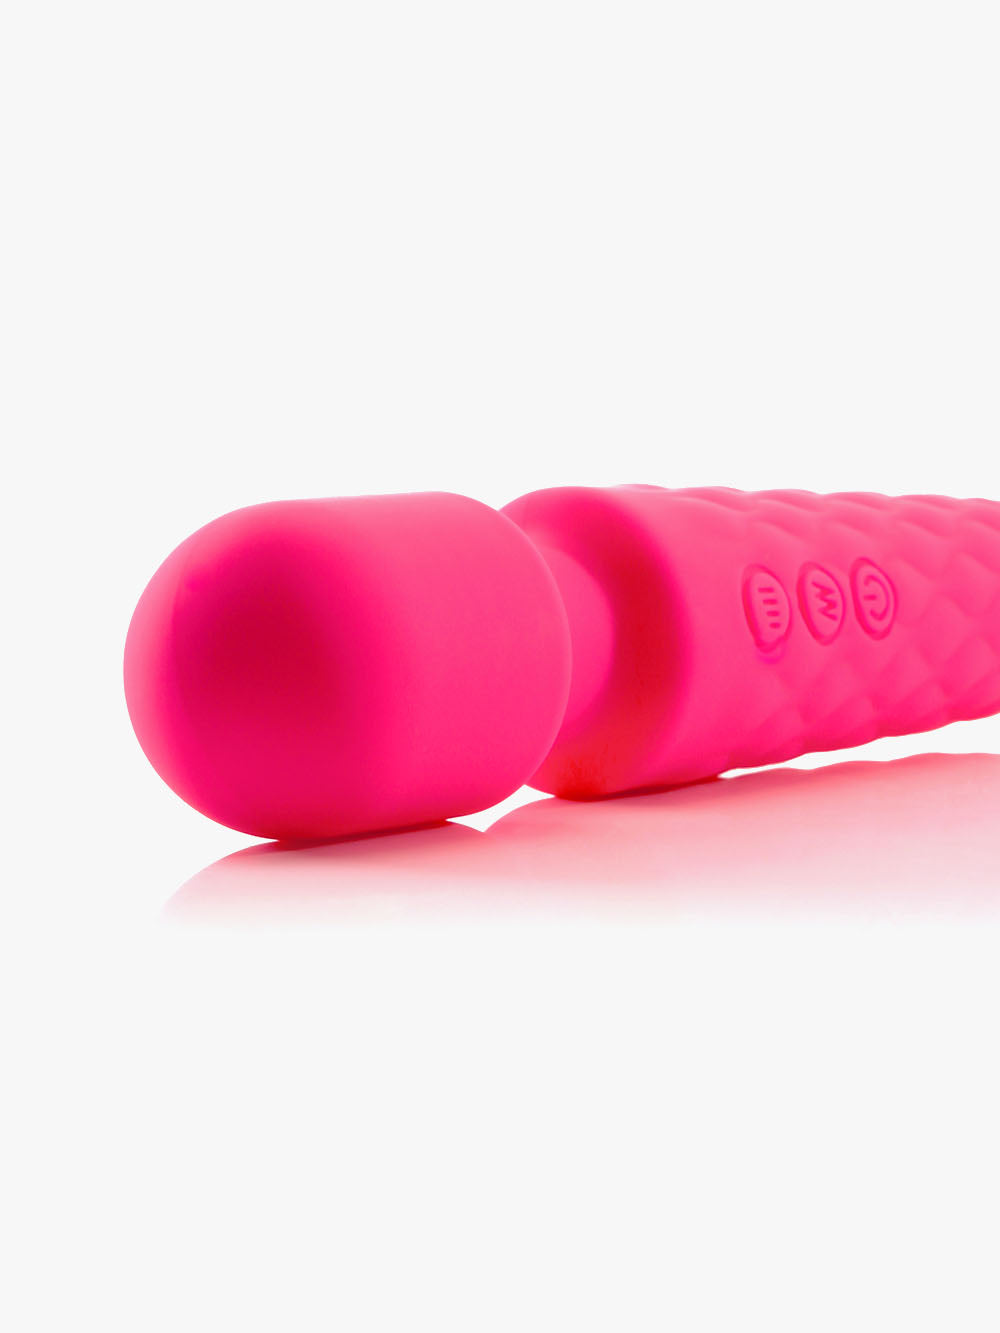 Pillow Talk Mini Magic Wand Vibrator - Pink, 7.5 Inches